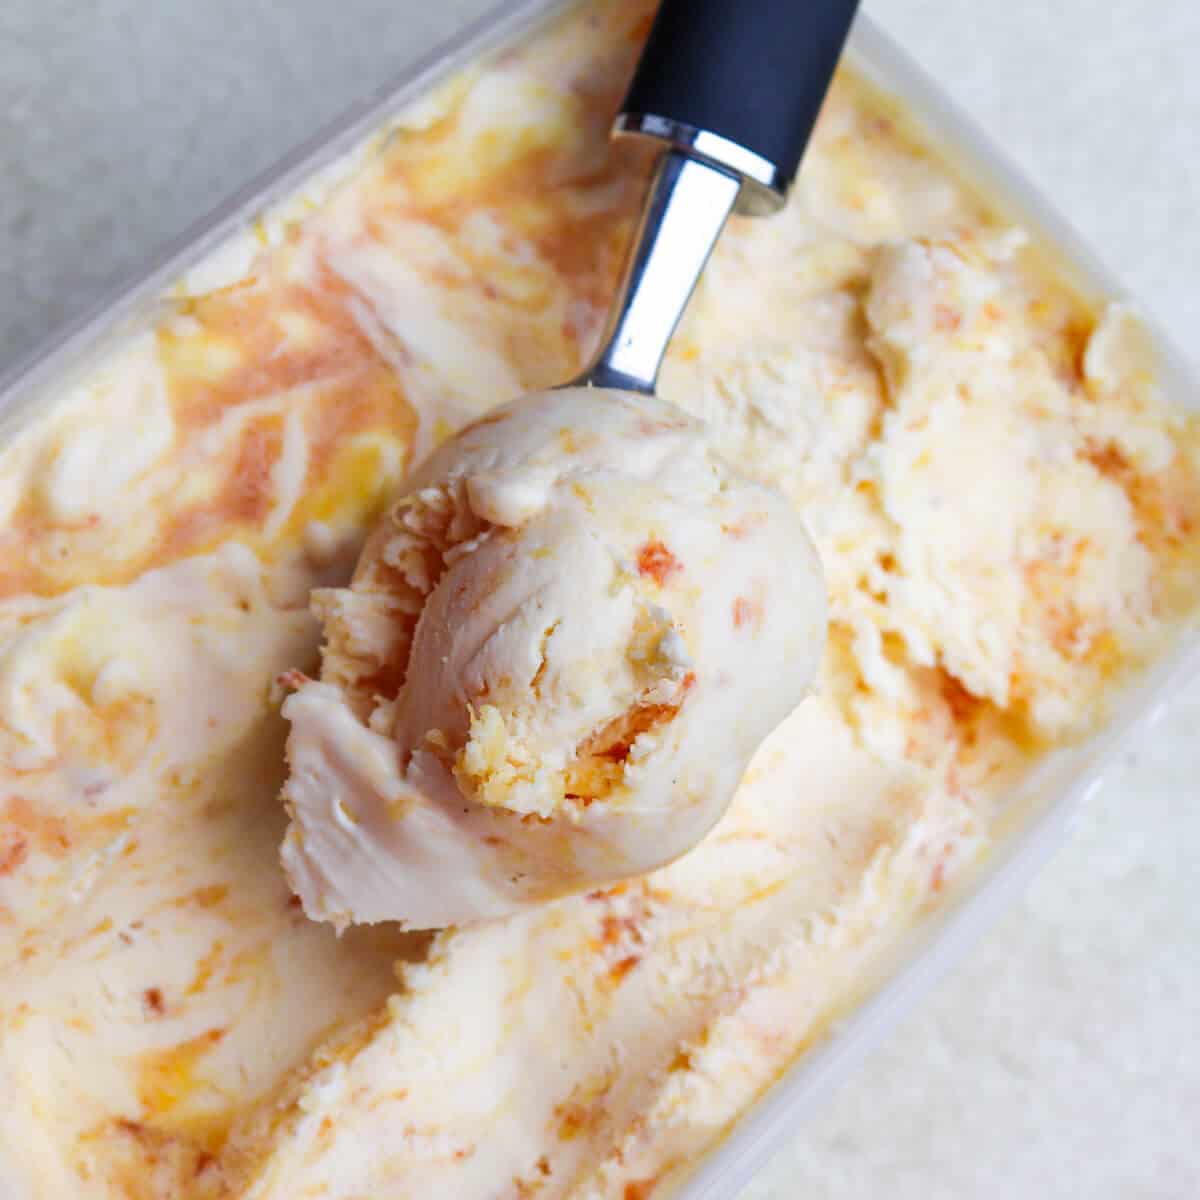 Peaches-and-cream-ice-cream-in-a-tub-with-ice-cream-scoop.